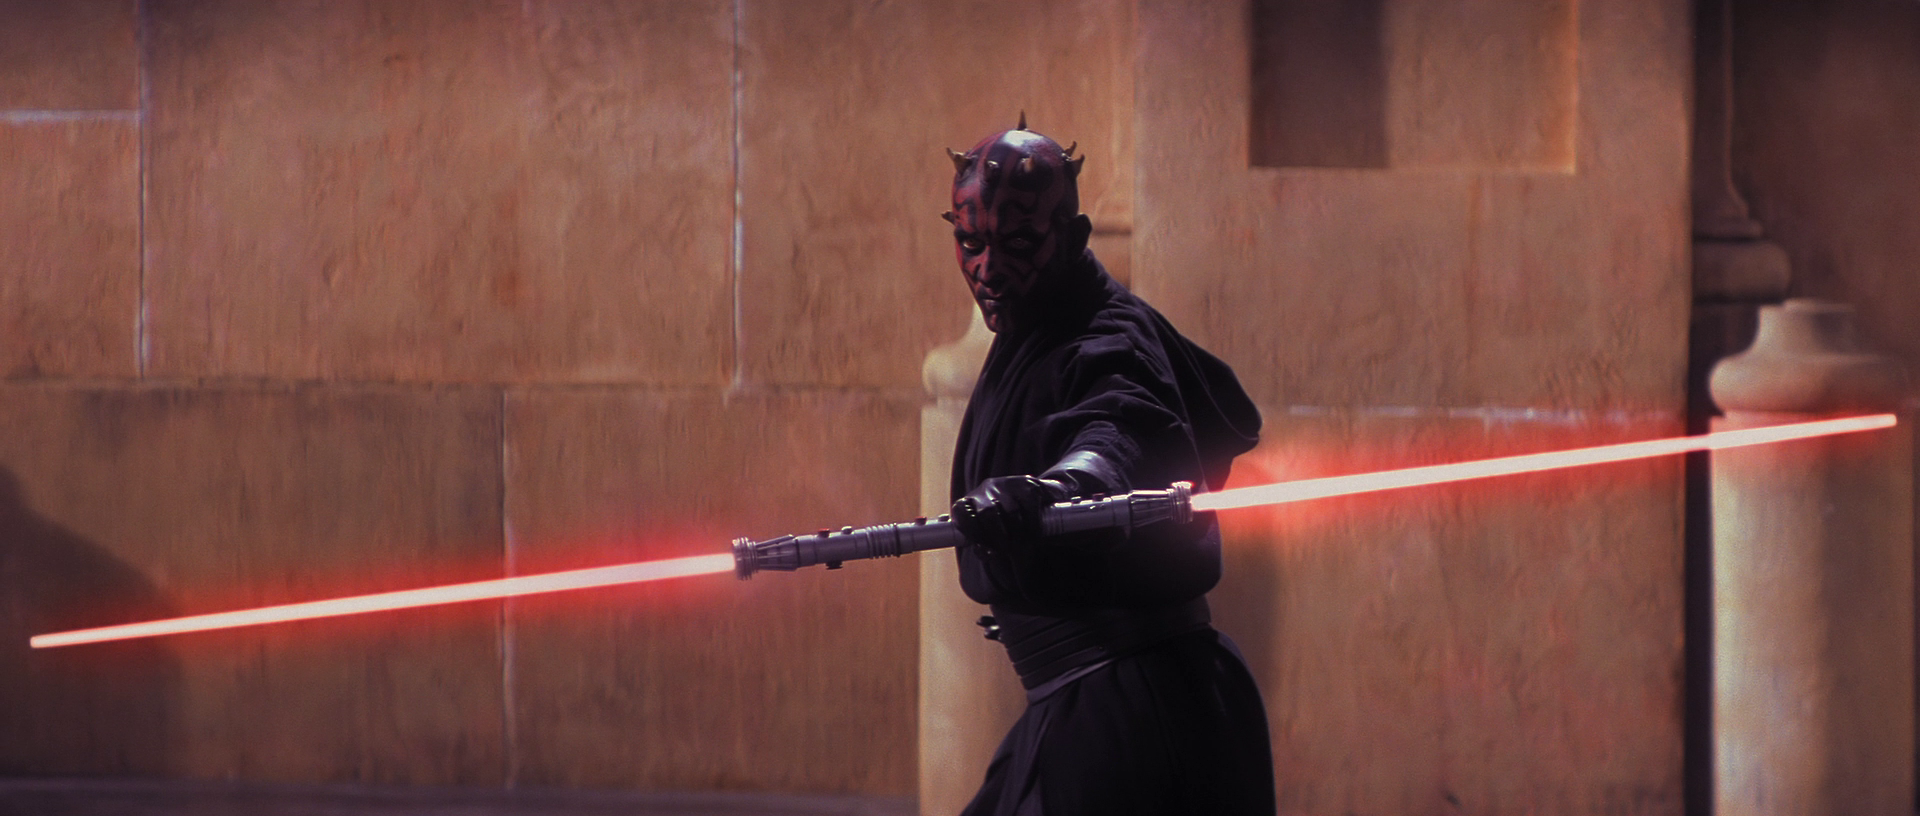 Как Сделать Световой меч? - Форум Star Wars: Knights of the Old Republic 2 - The Sith Lords